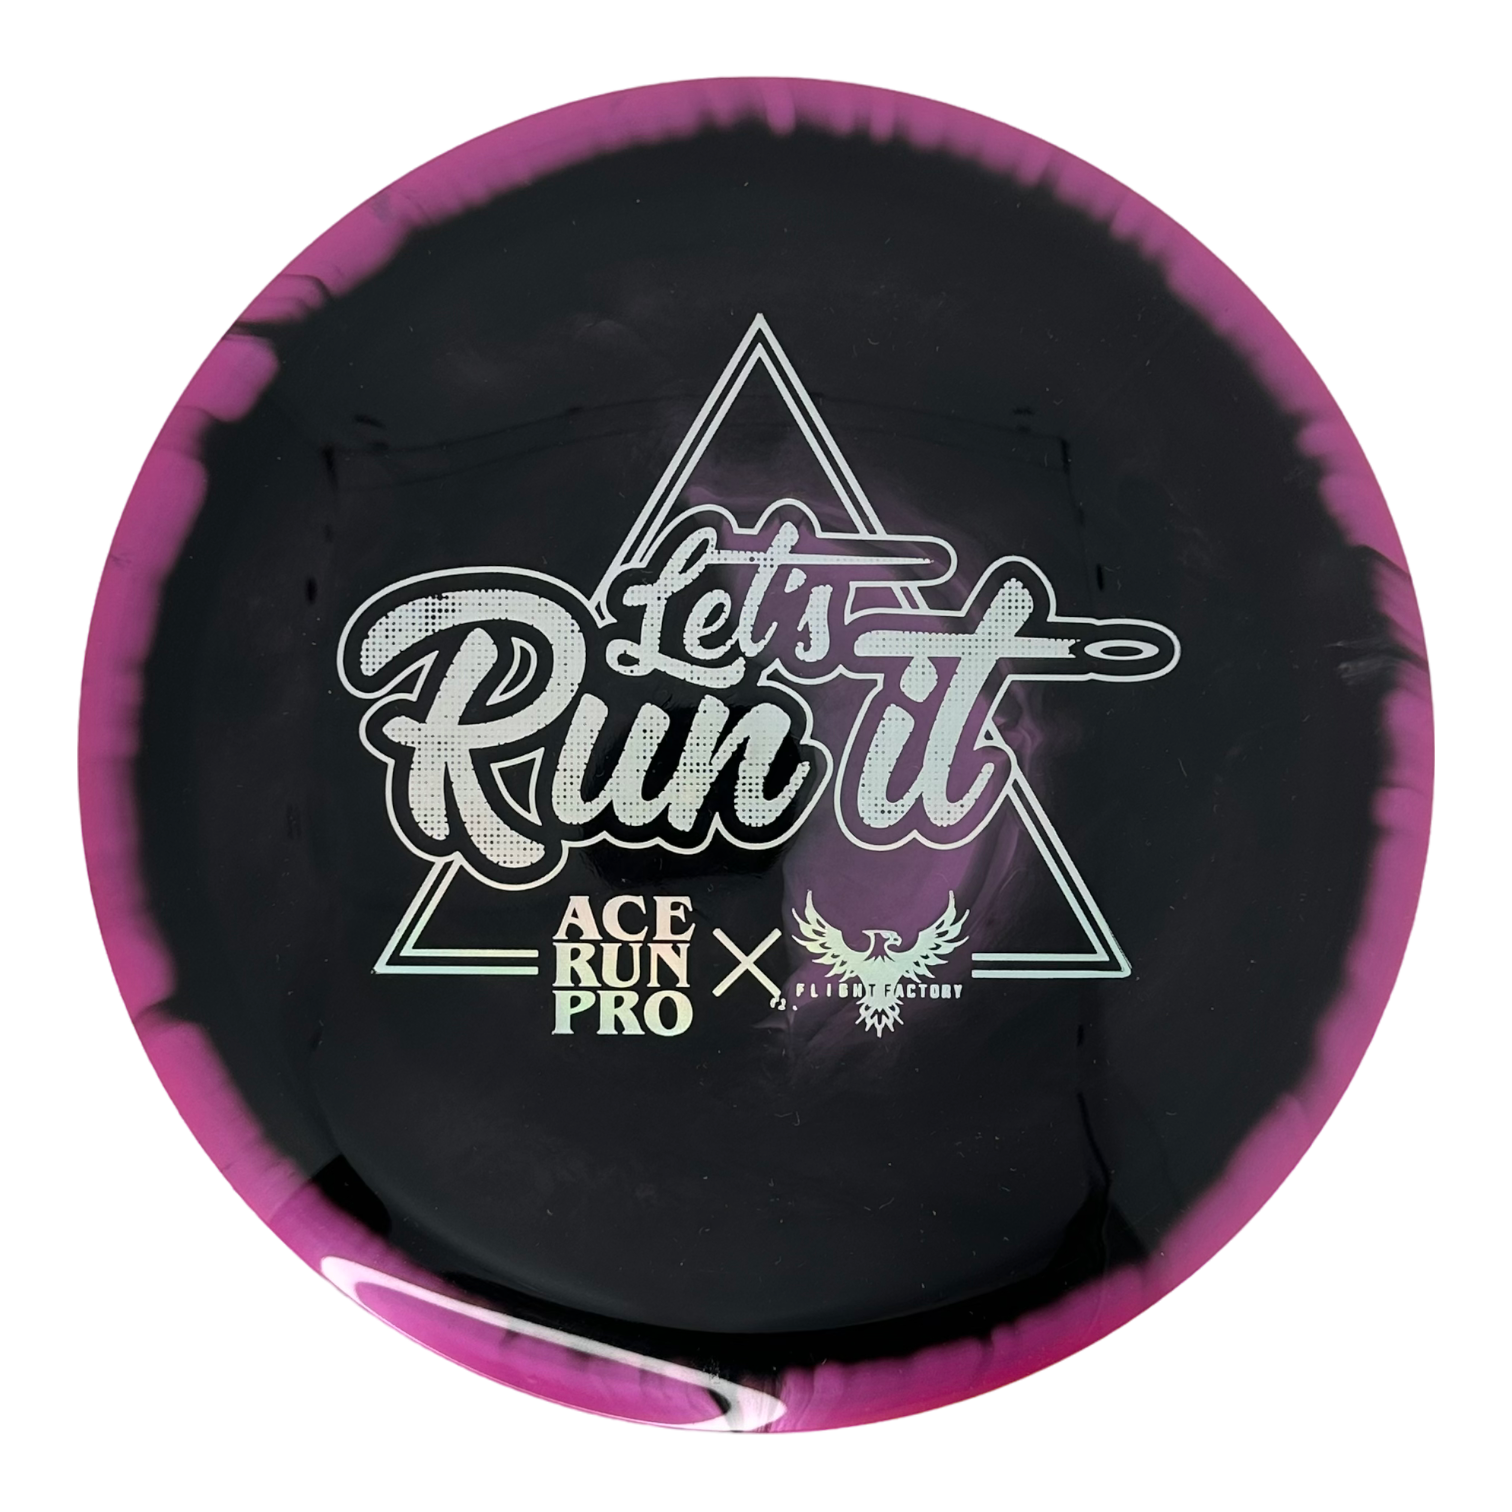 Innova Halo Star Roadrunner - Ace Run Pro "Let's Run It"